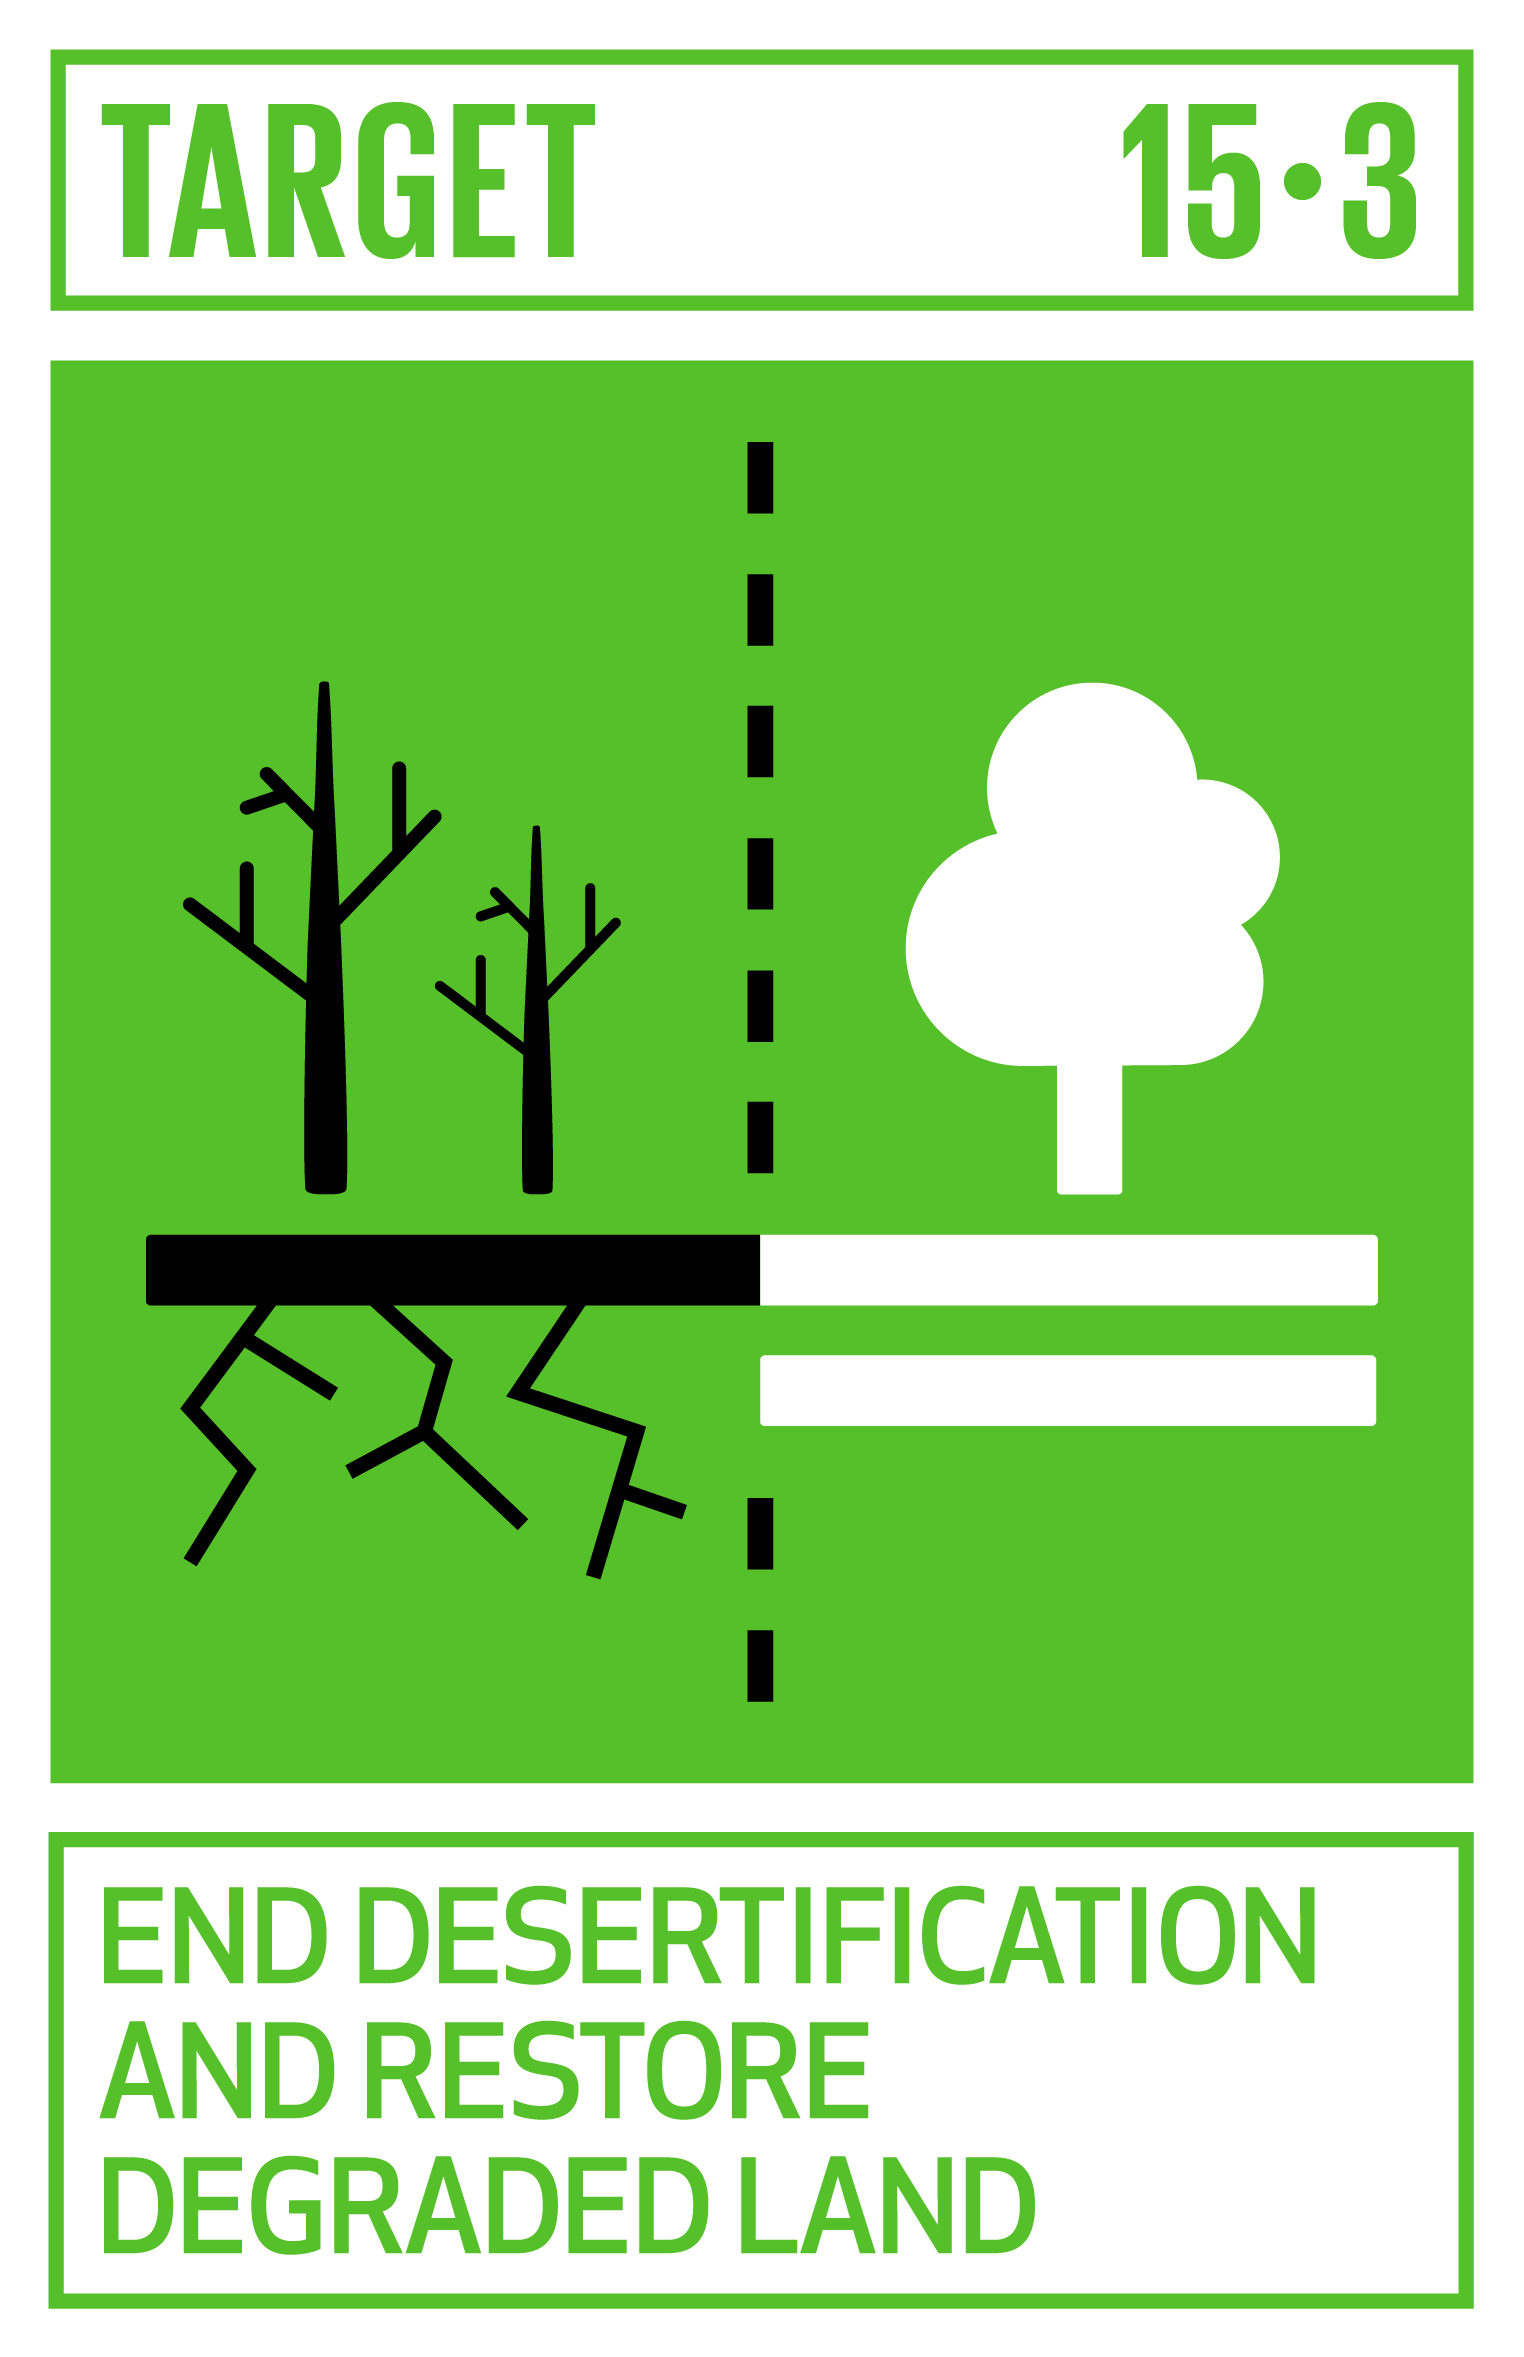 Goal,target,永續發展目標SDGs15,目標15.3結束荒漠化，恢復退化土地